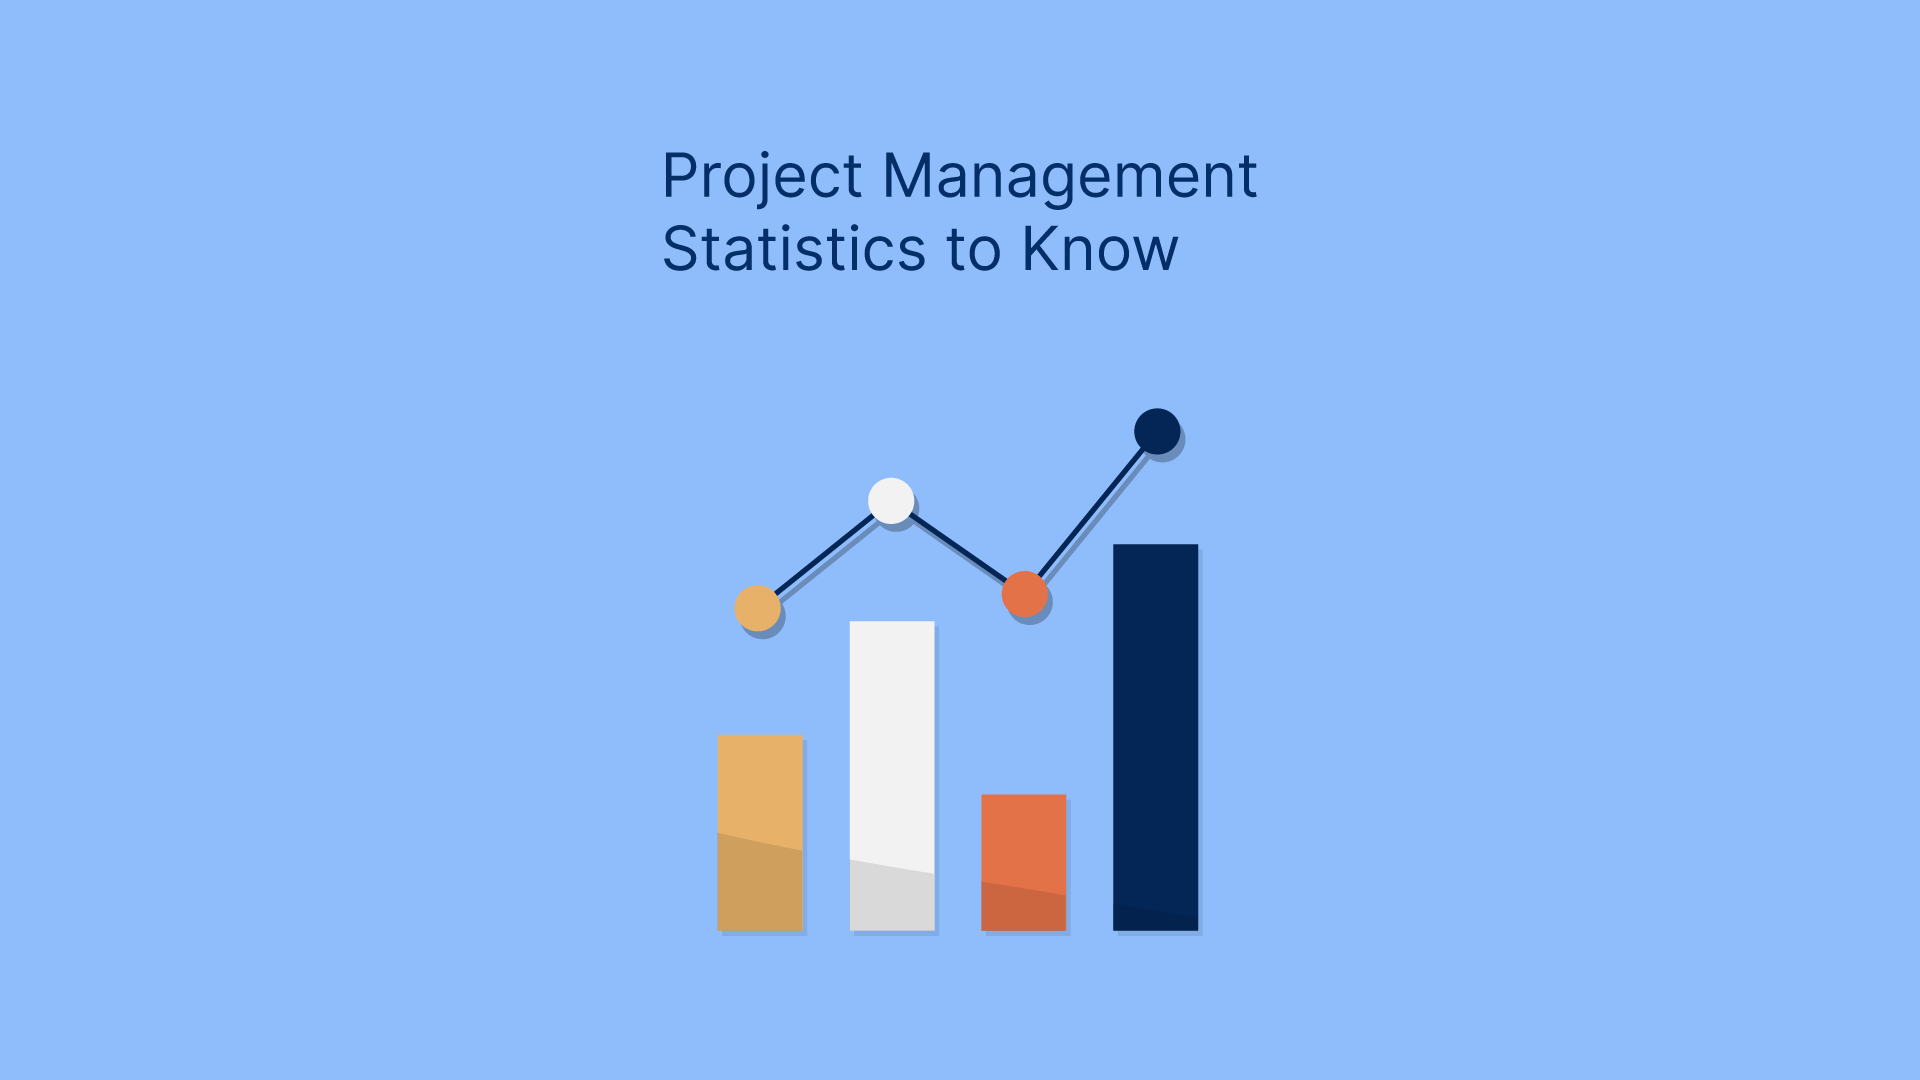 Project Management statistics